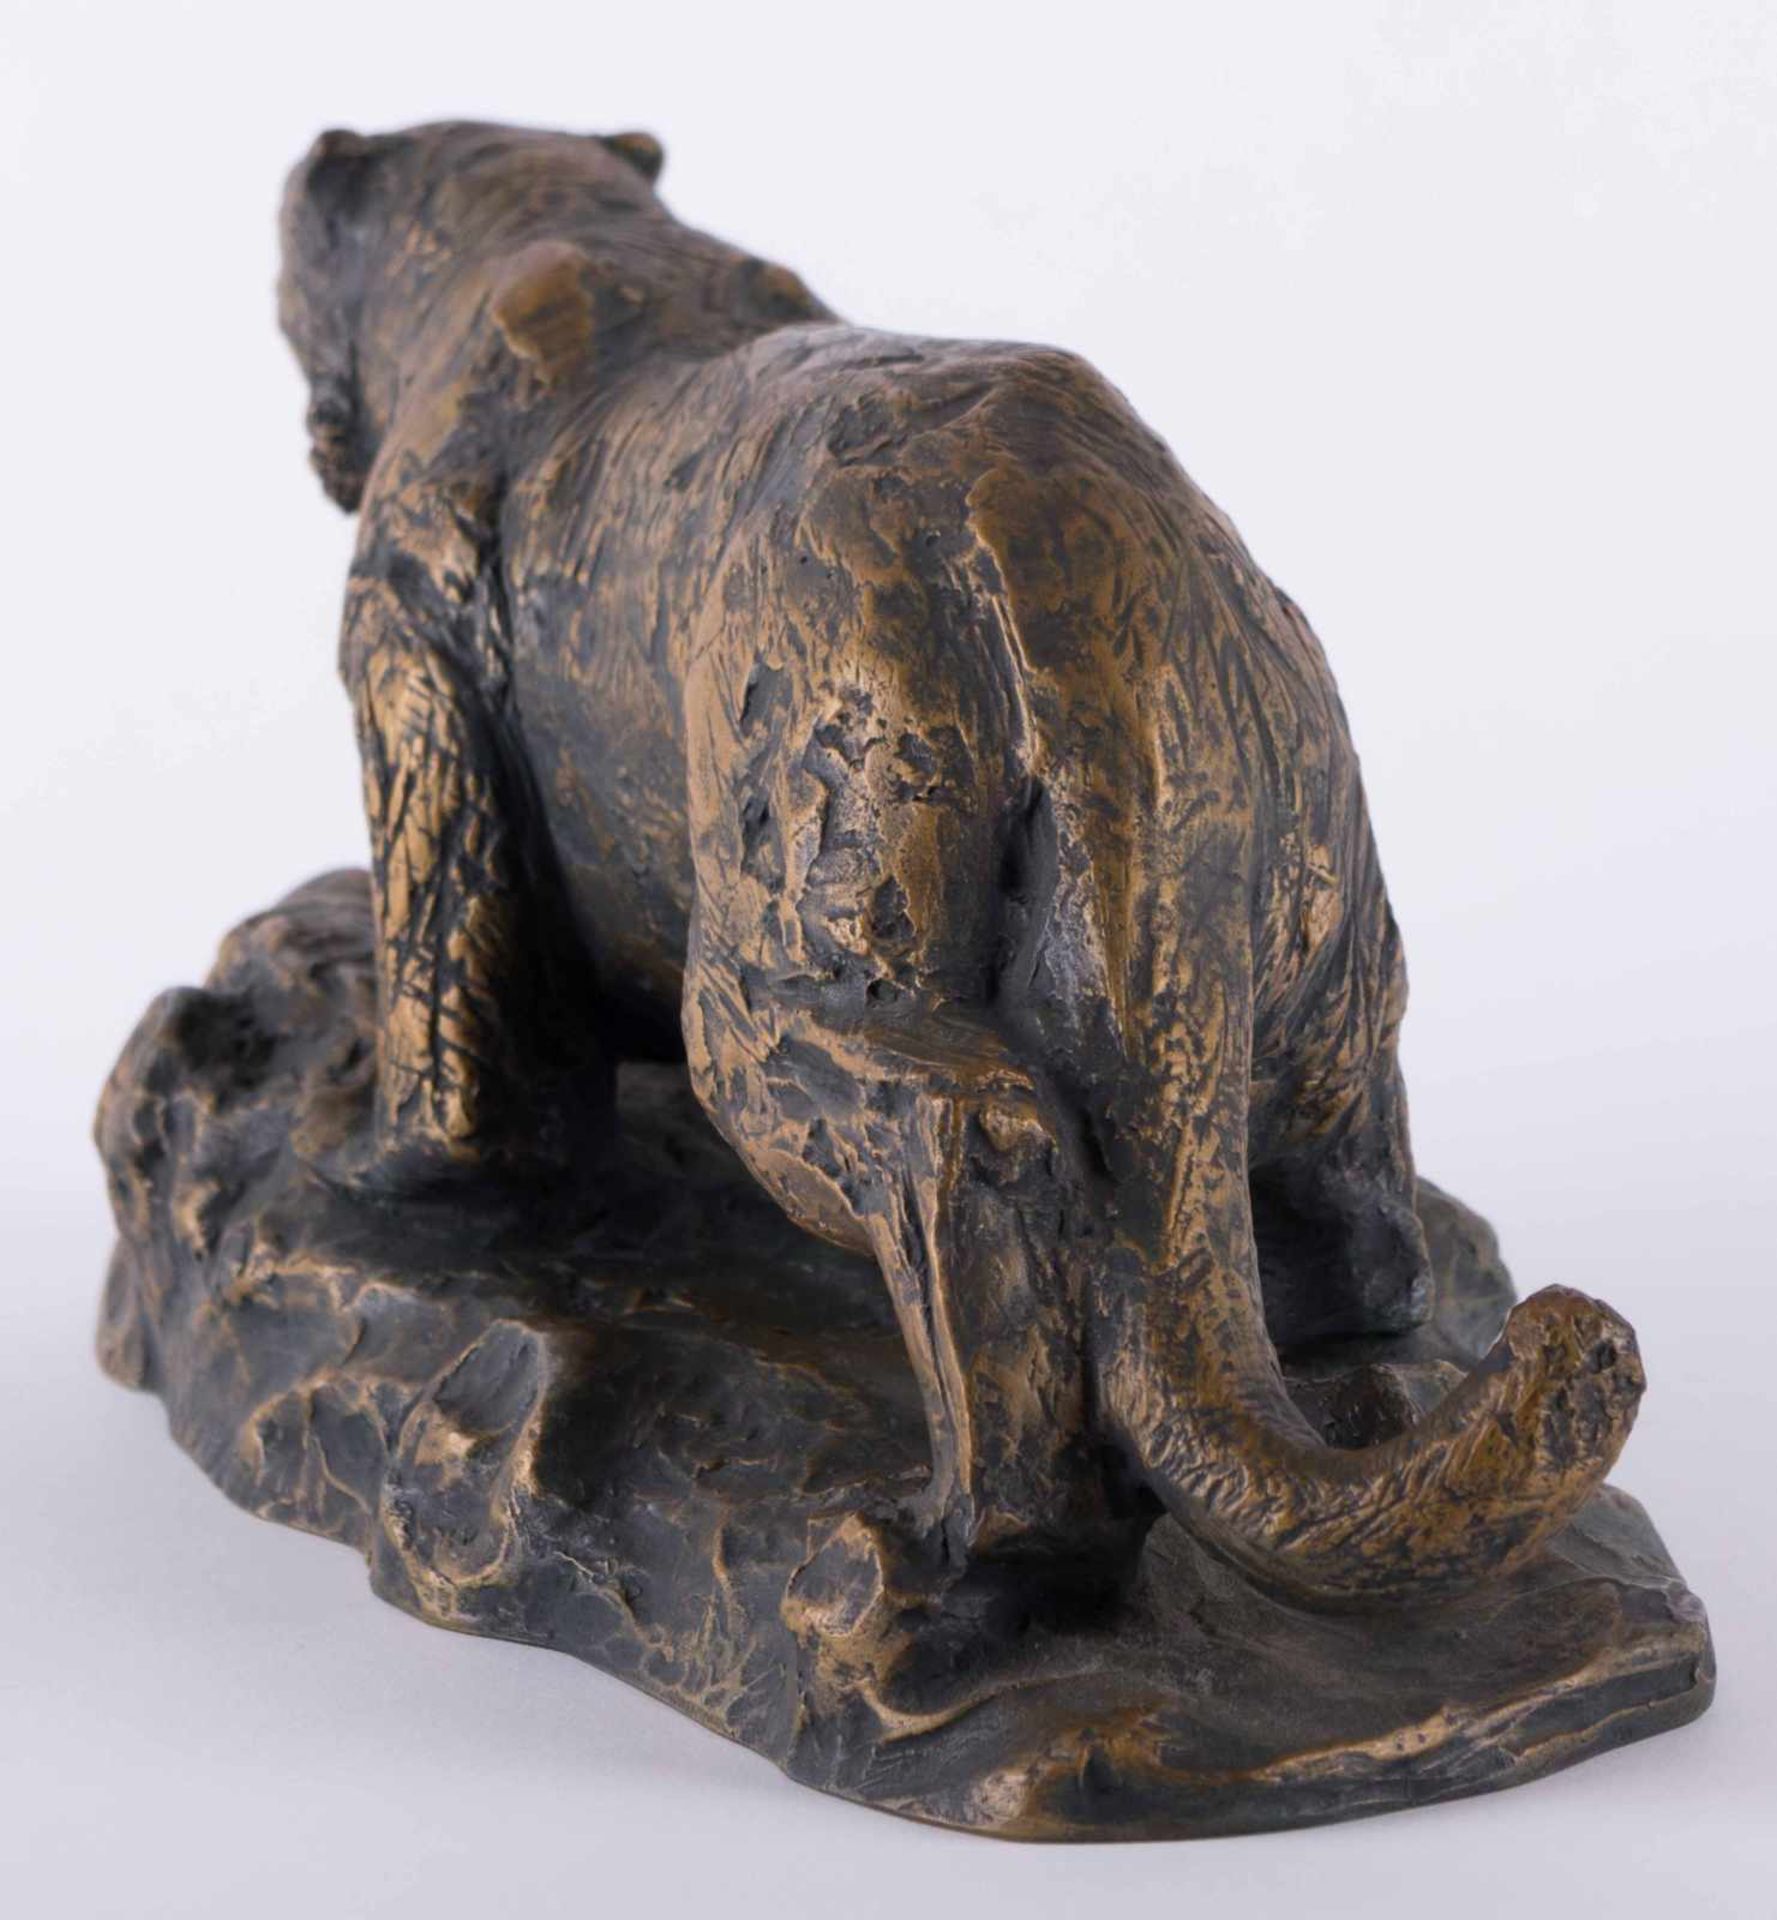 Seibo KITAMURA (1884-1997) "Tiger" Skulptur-Volumen, Bronze, 14,5 cm x 32 cm x 12 cm, signiert - Image 5 of 6